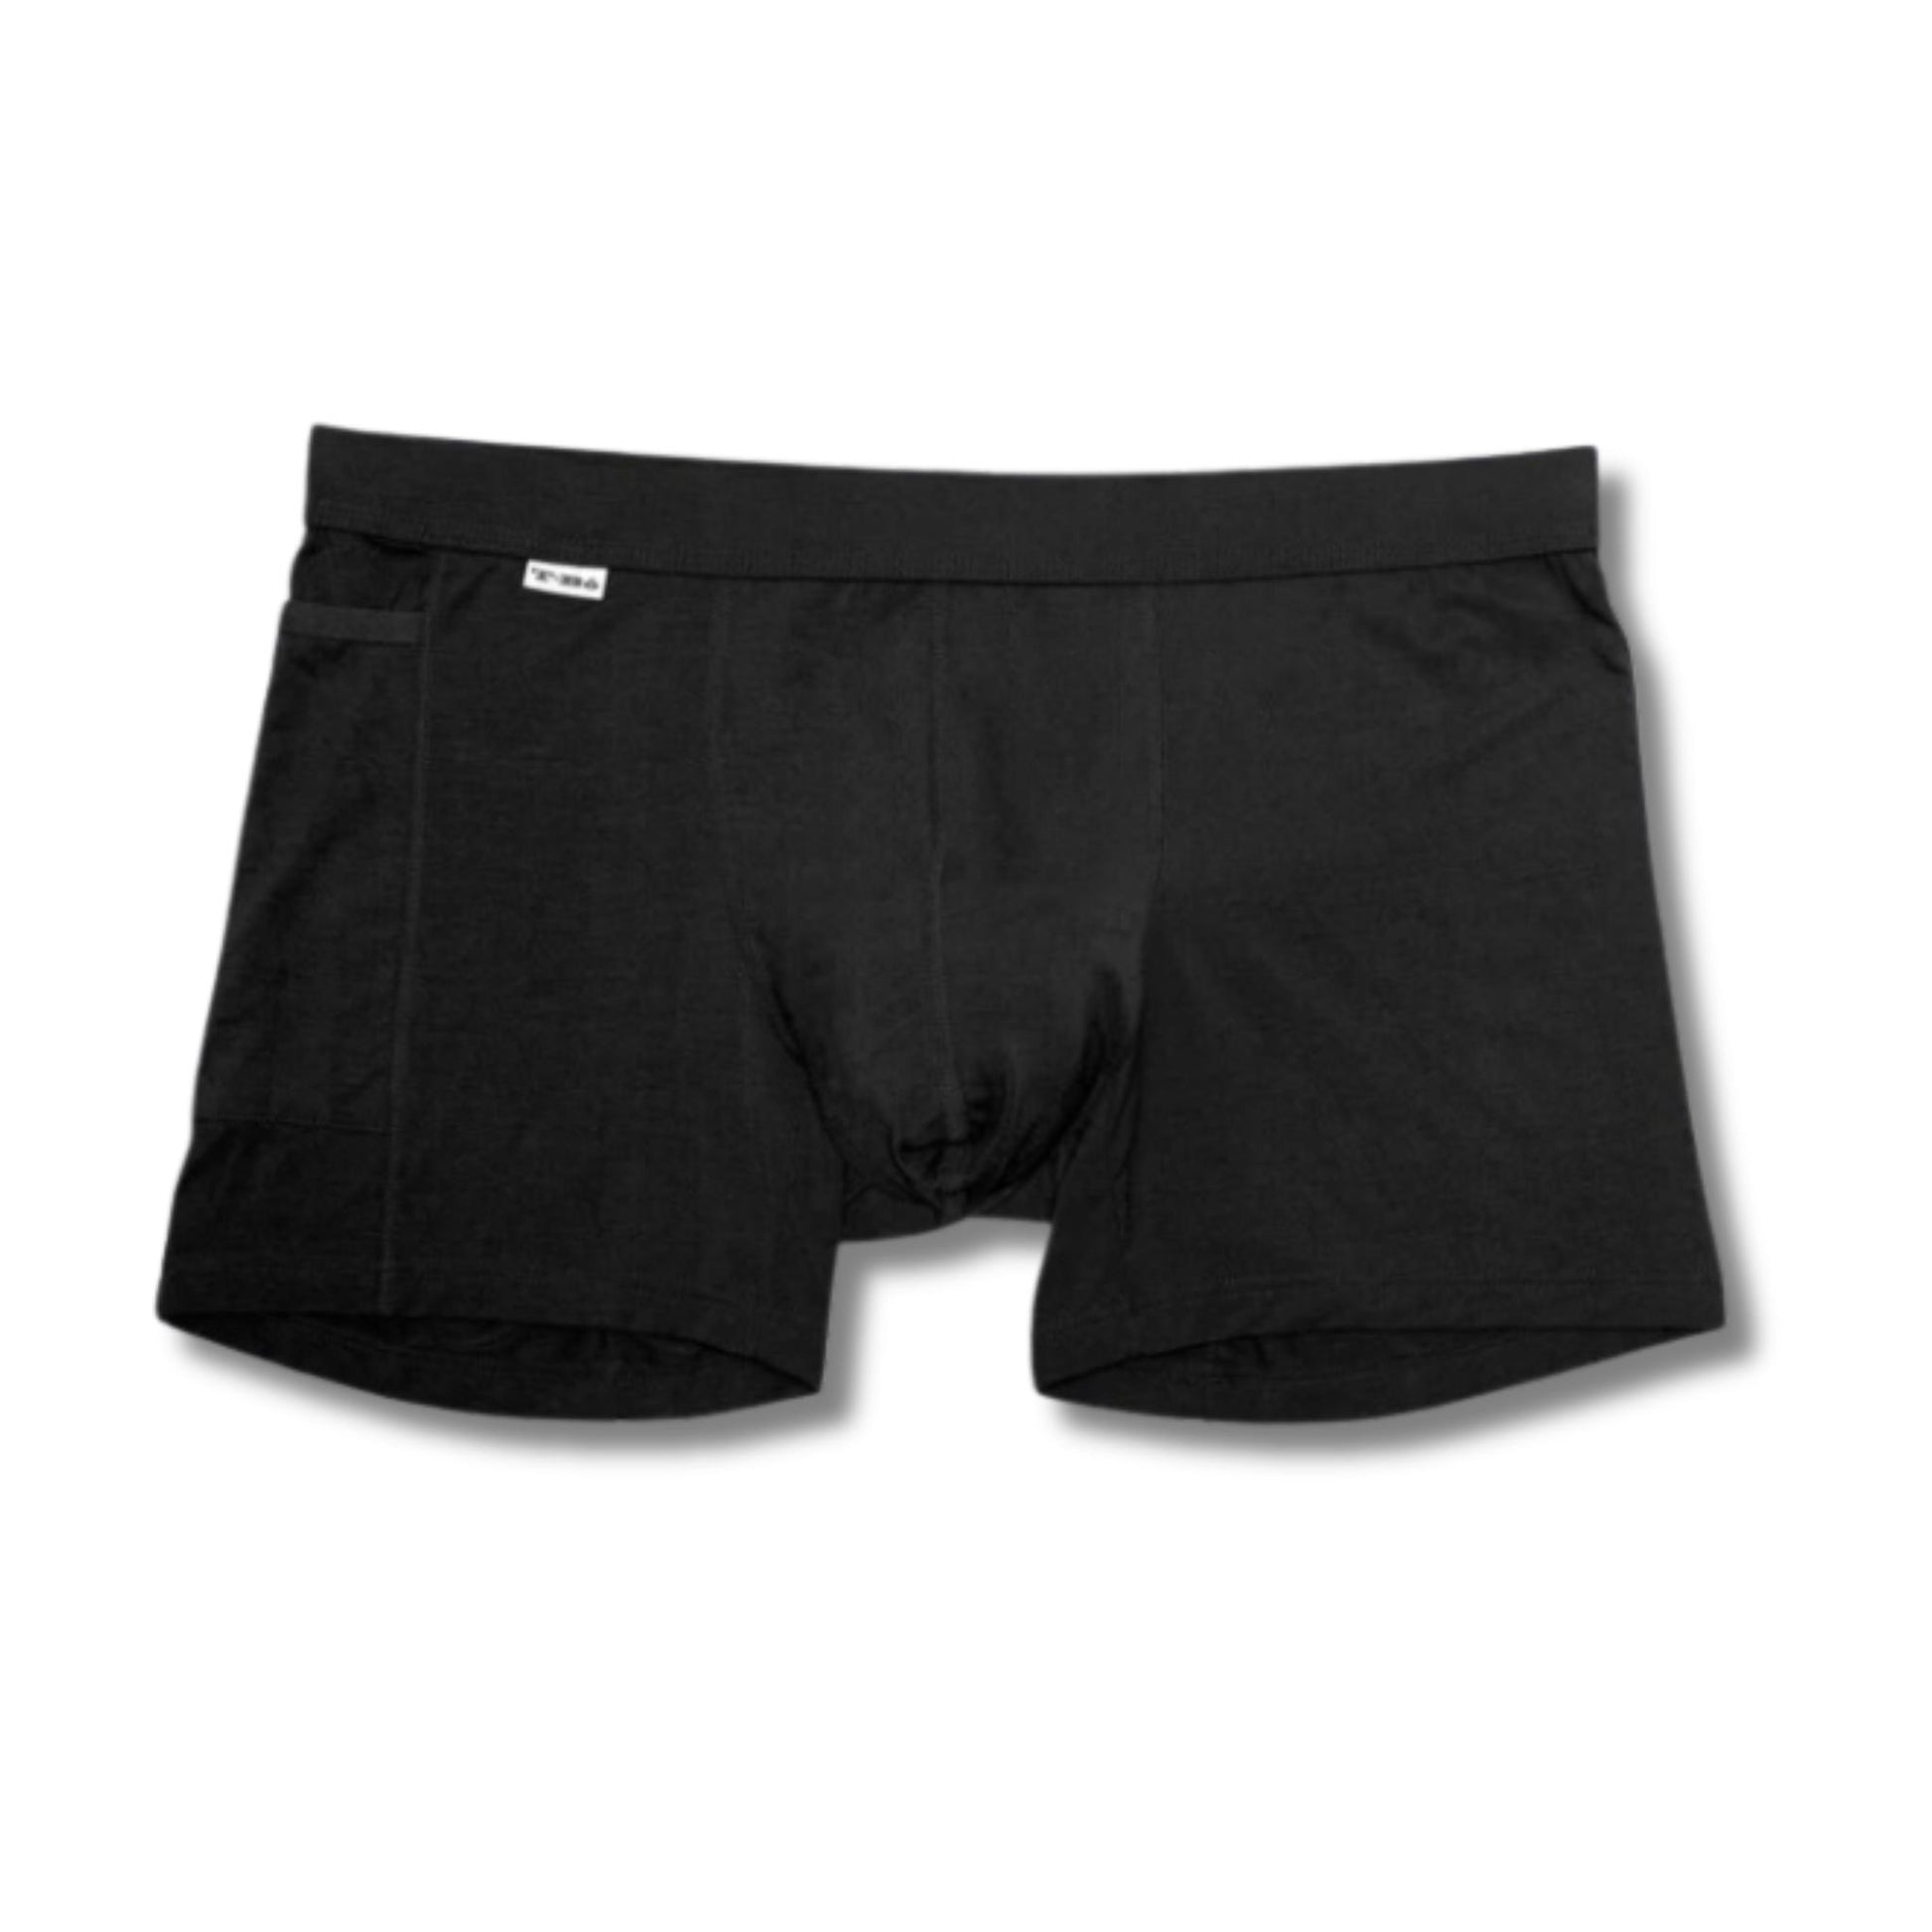 secutiy underwear with pockets and belt loop